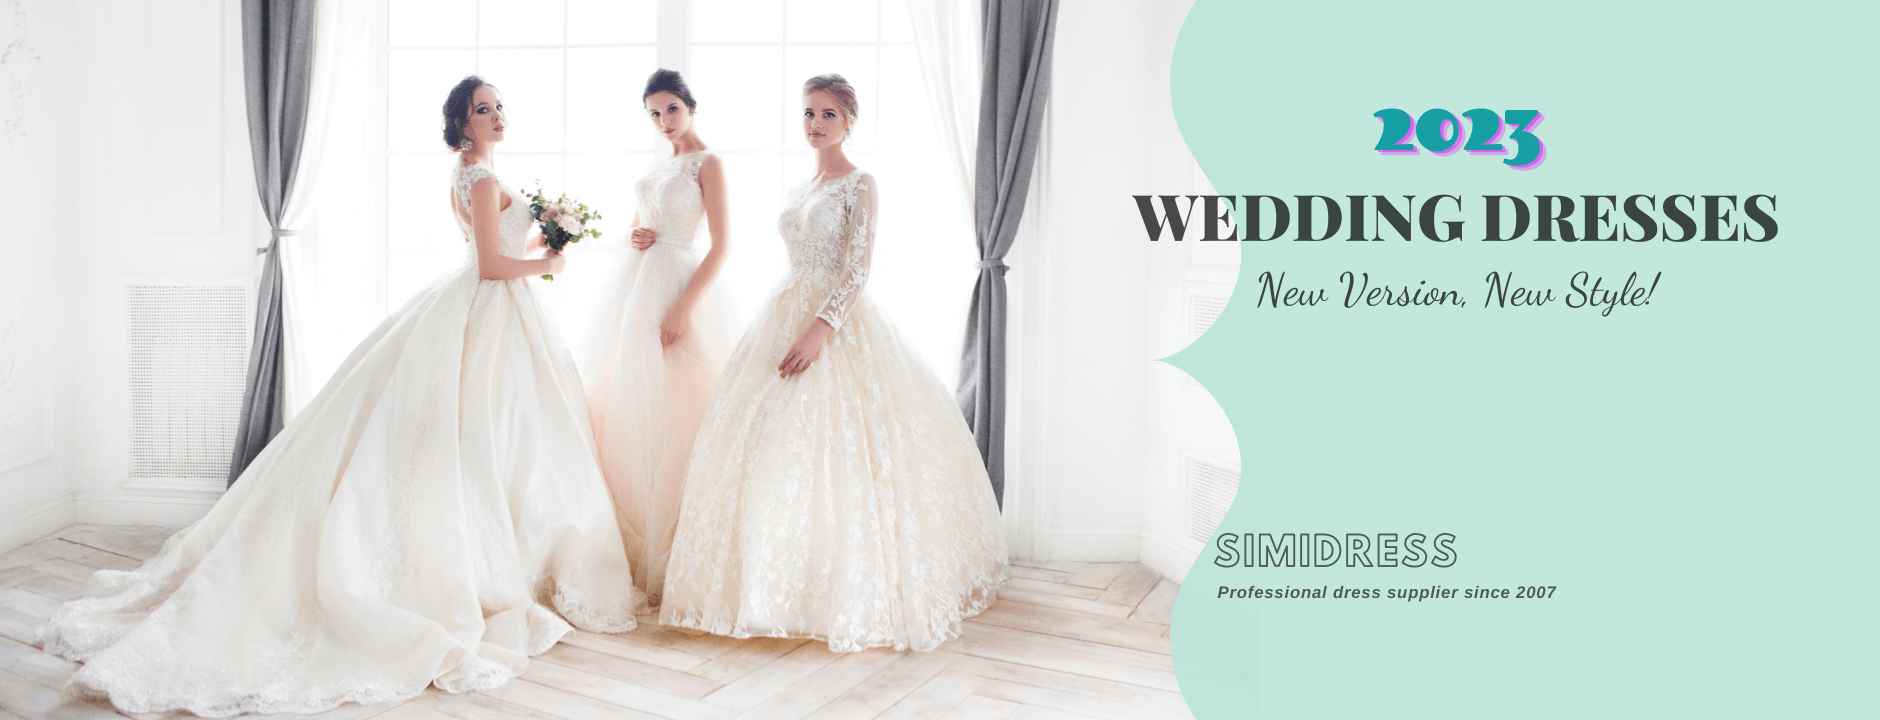 Lace wedding dresses | wedding dress 2023 | cheap wedding dresses | bridal gown | simidress.com